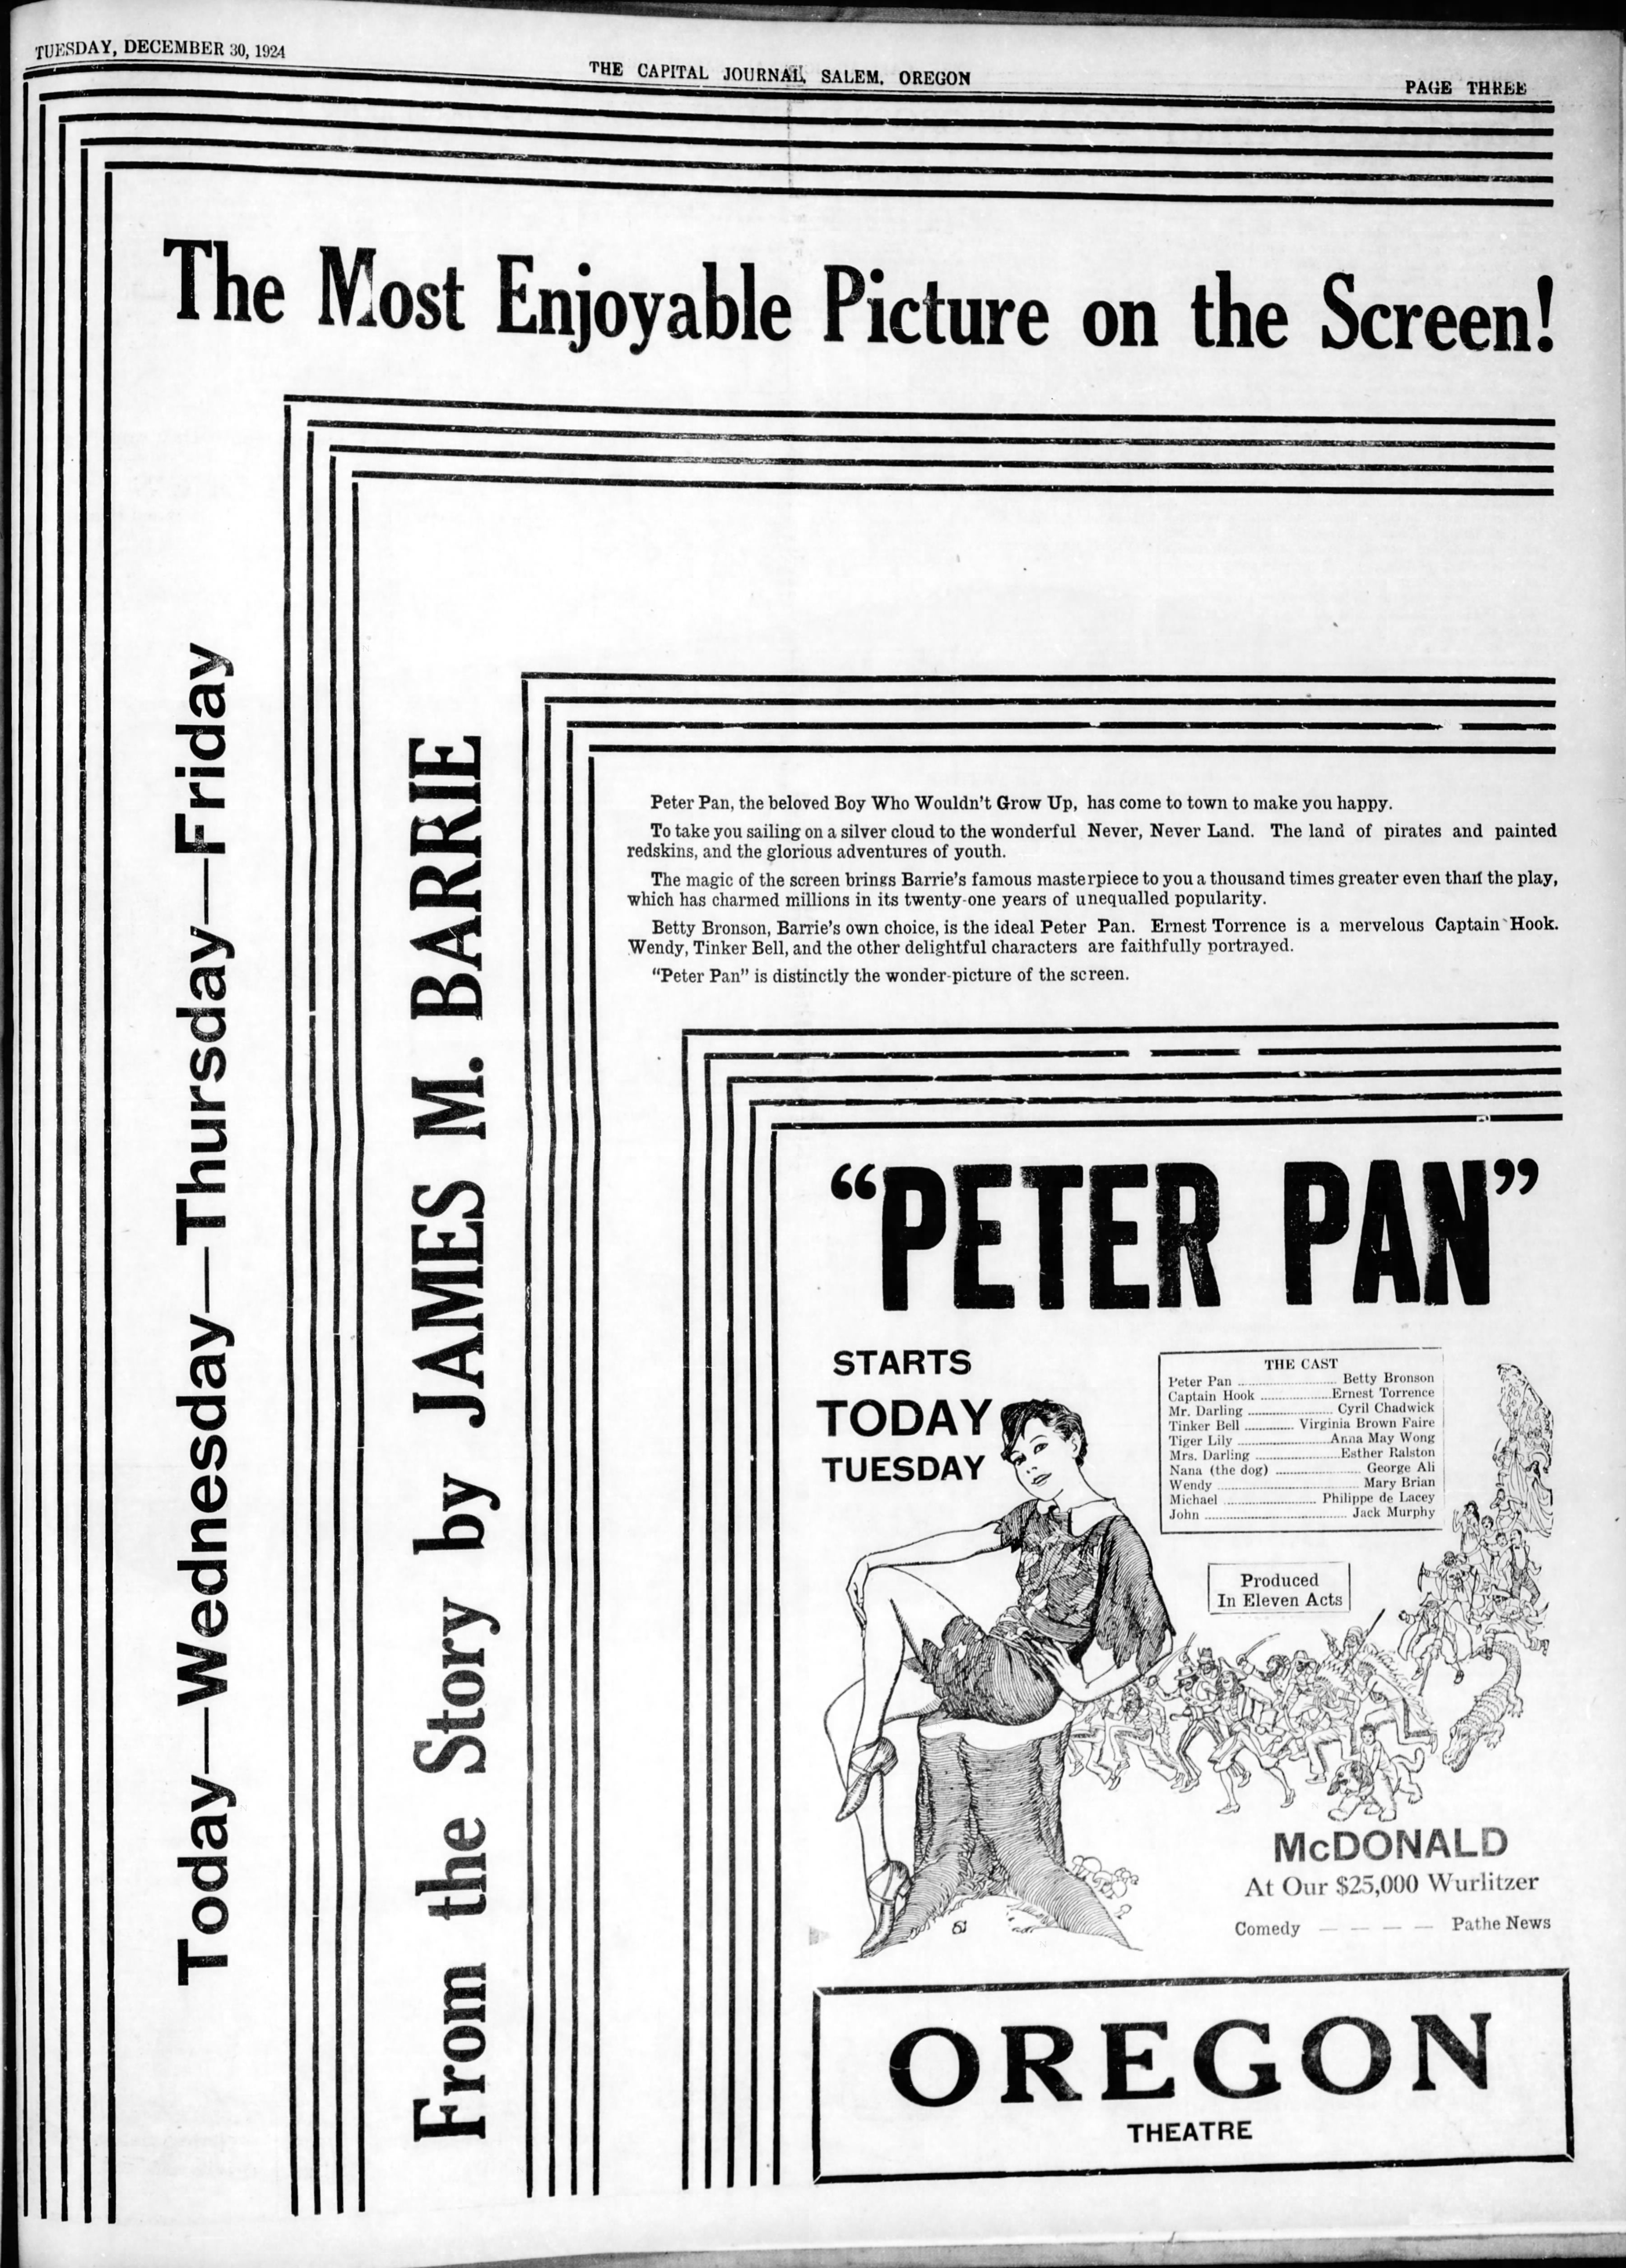 Peter Pan at the Oregon theater, 1924